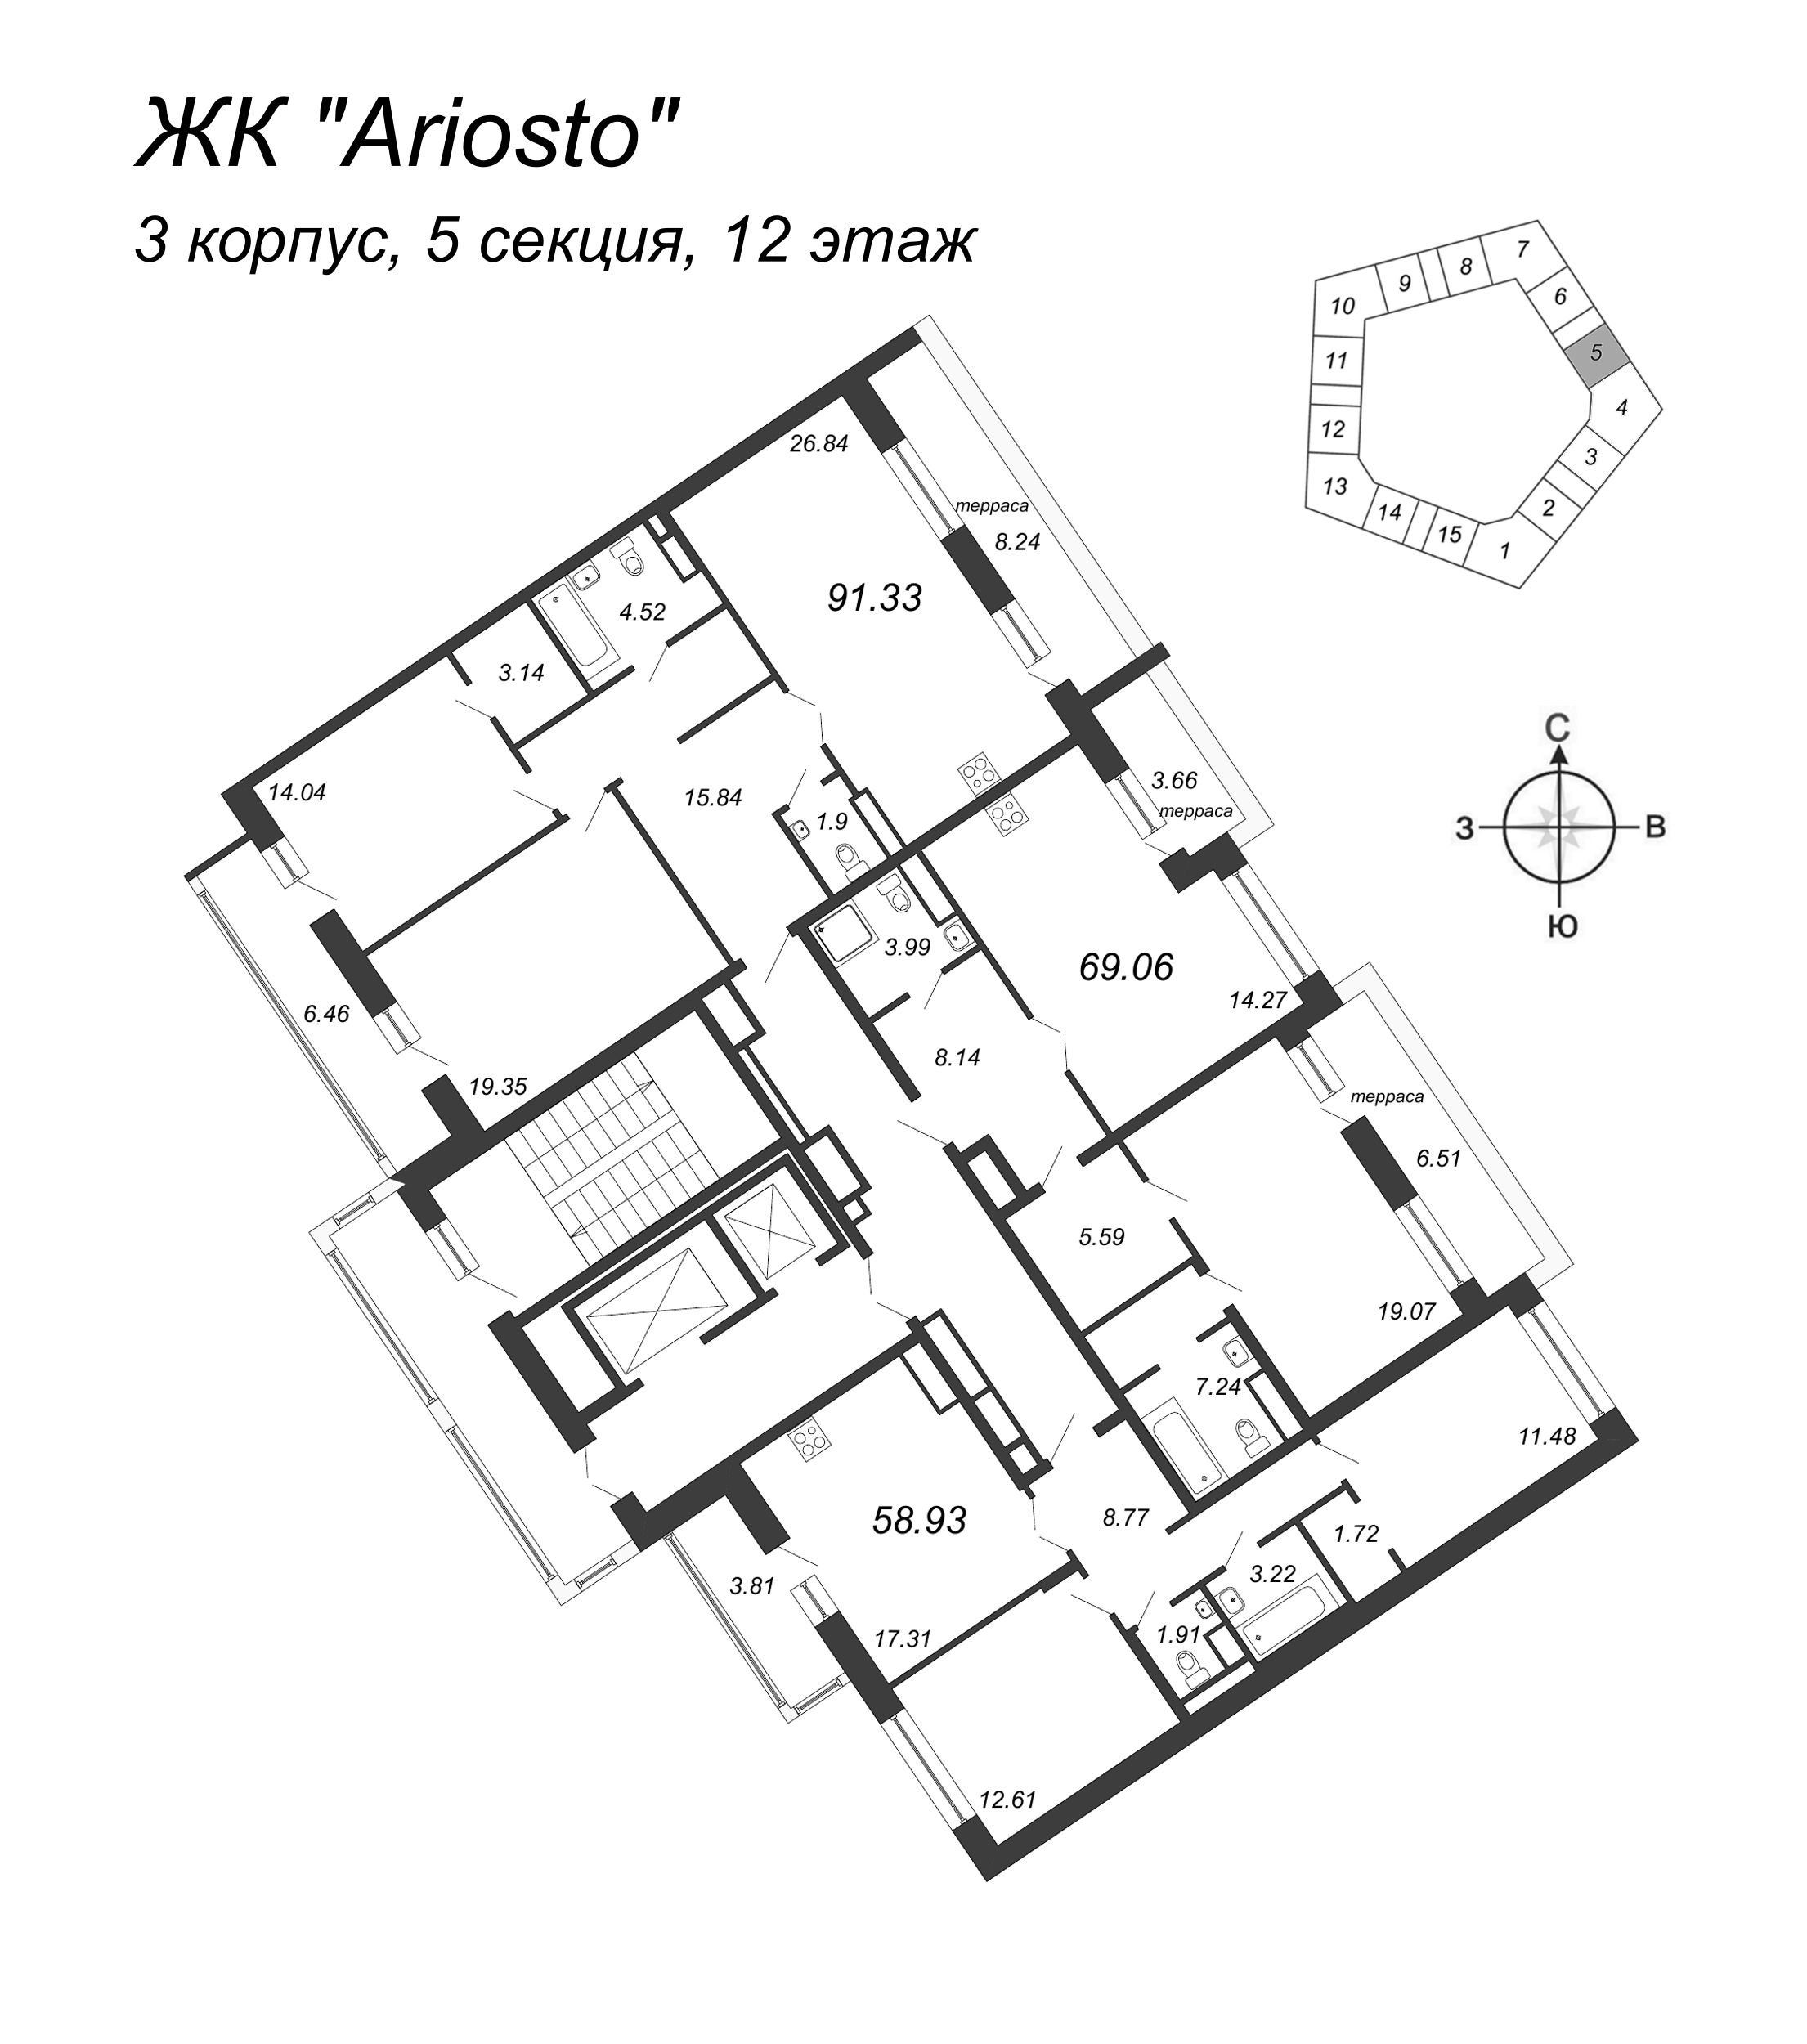 2-комнатная (Евро) квартира, 69.06 м² - планировка этажа